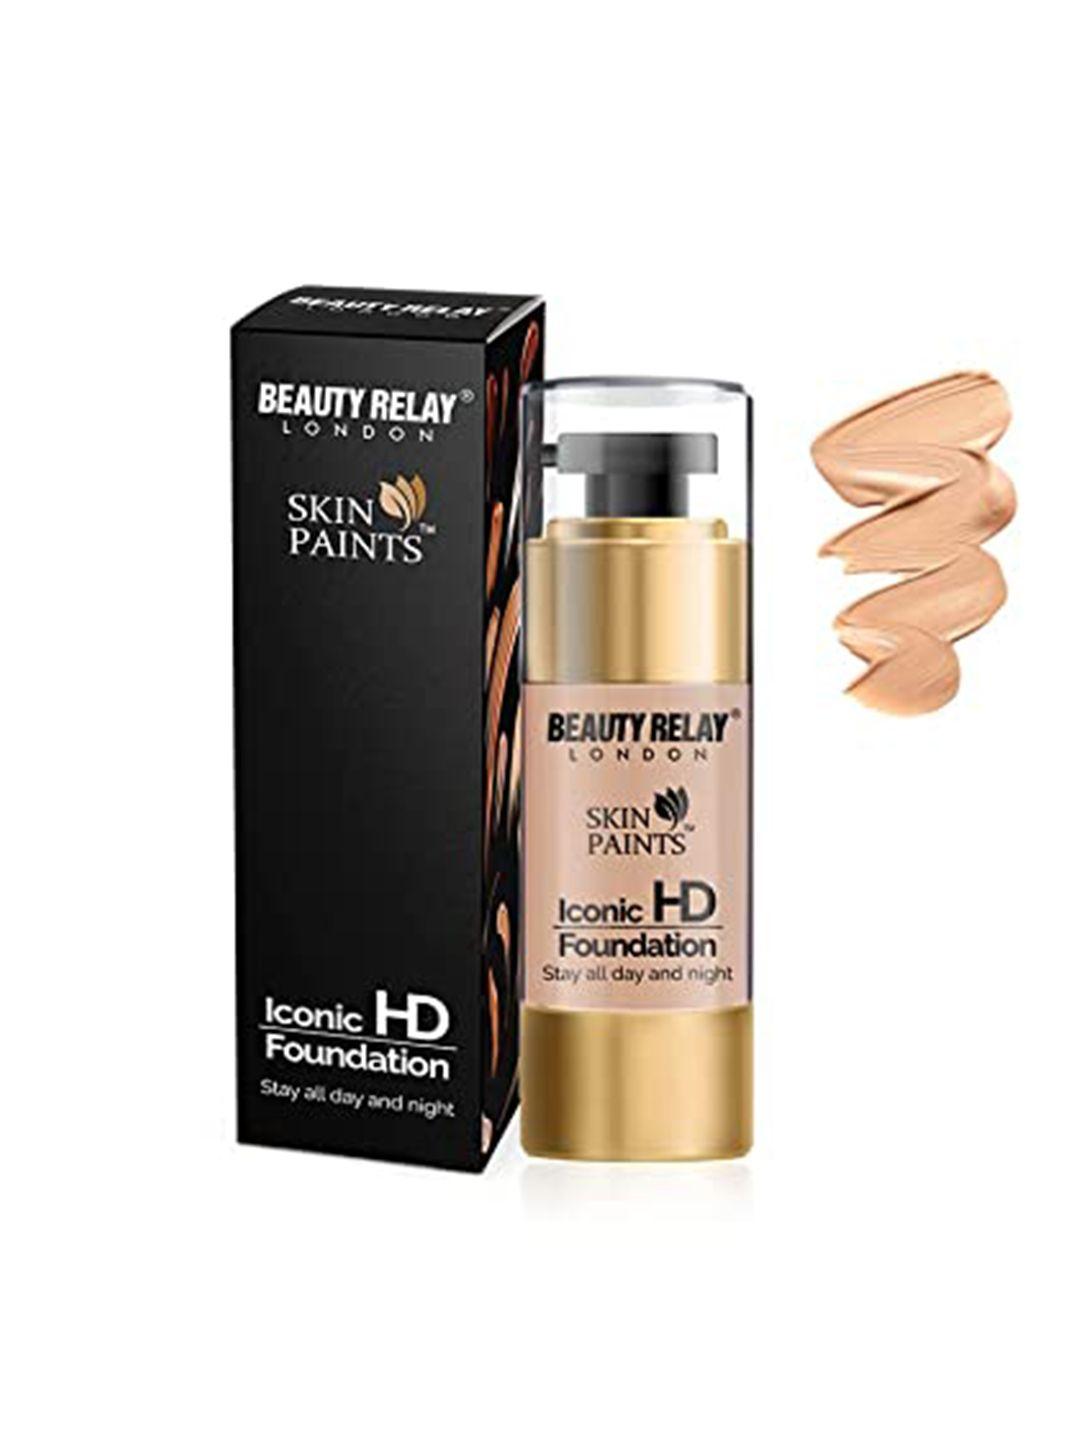 beautyrelay london skin paints iconic hd foundation 30ml - buff beige 130